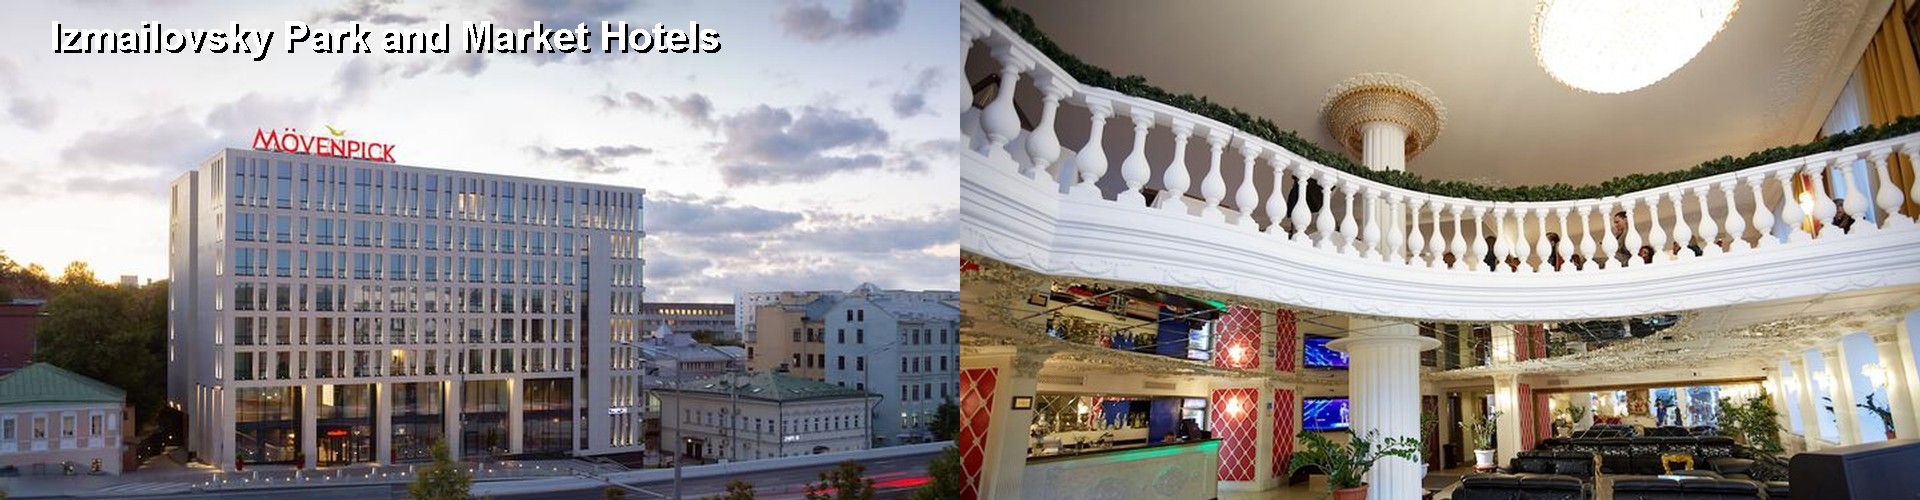 5 Best Hotels near Izmailovsky Park and Market